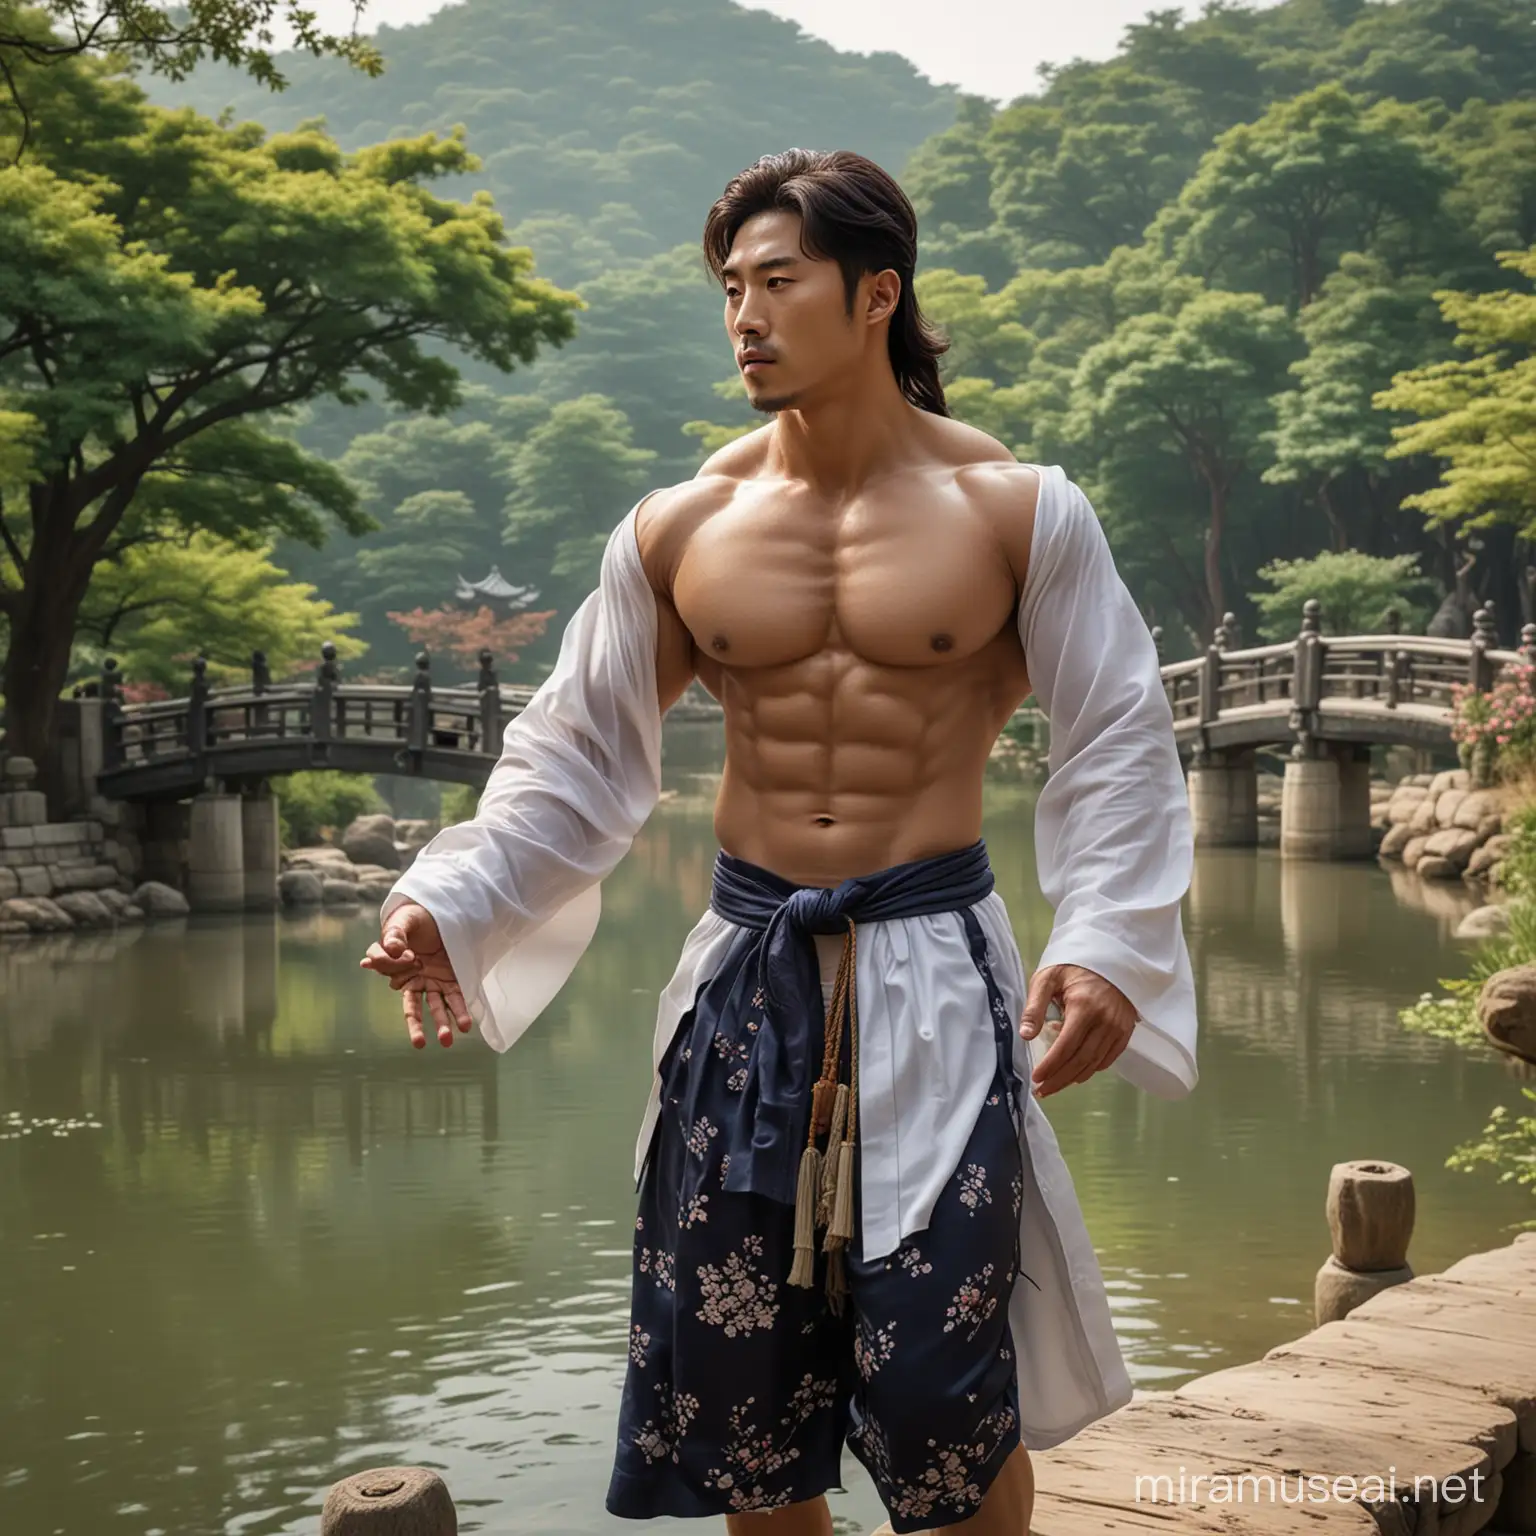 Korean Muscular Bodybuilder in Traditional Attire Poses in Serene Garden Setting